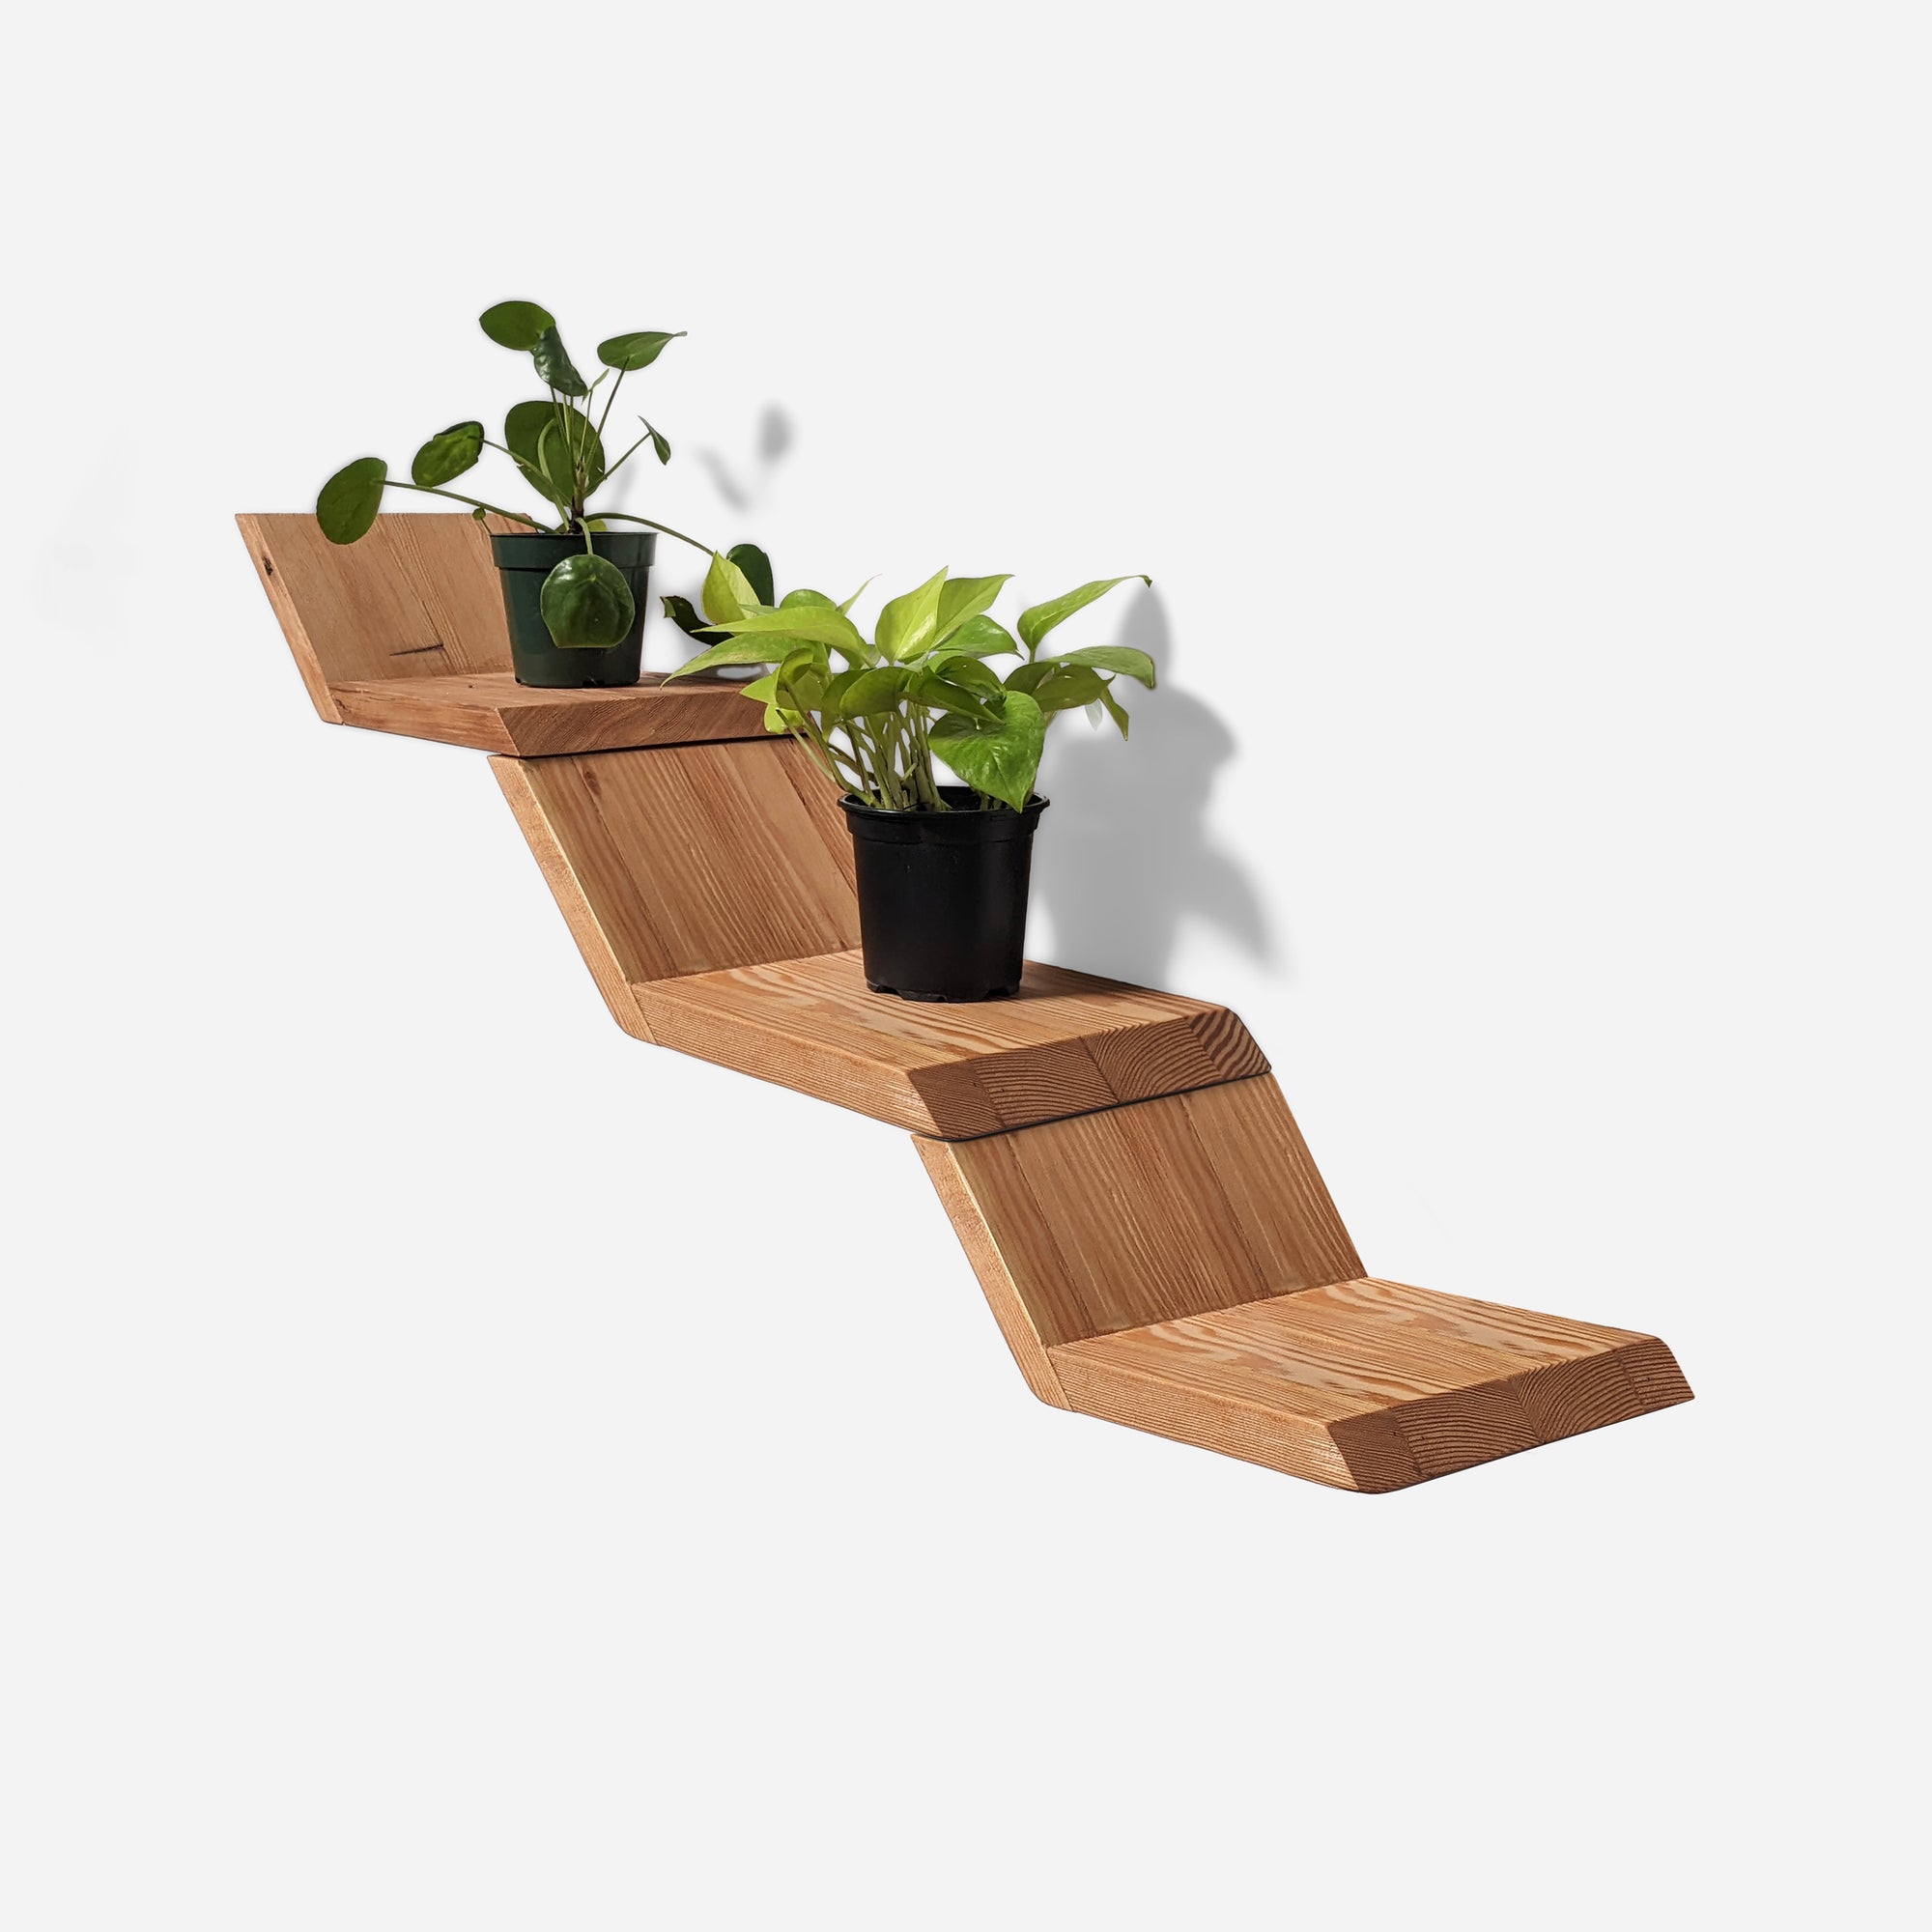 Thin shelf with plants on it